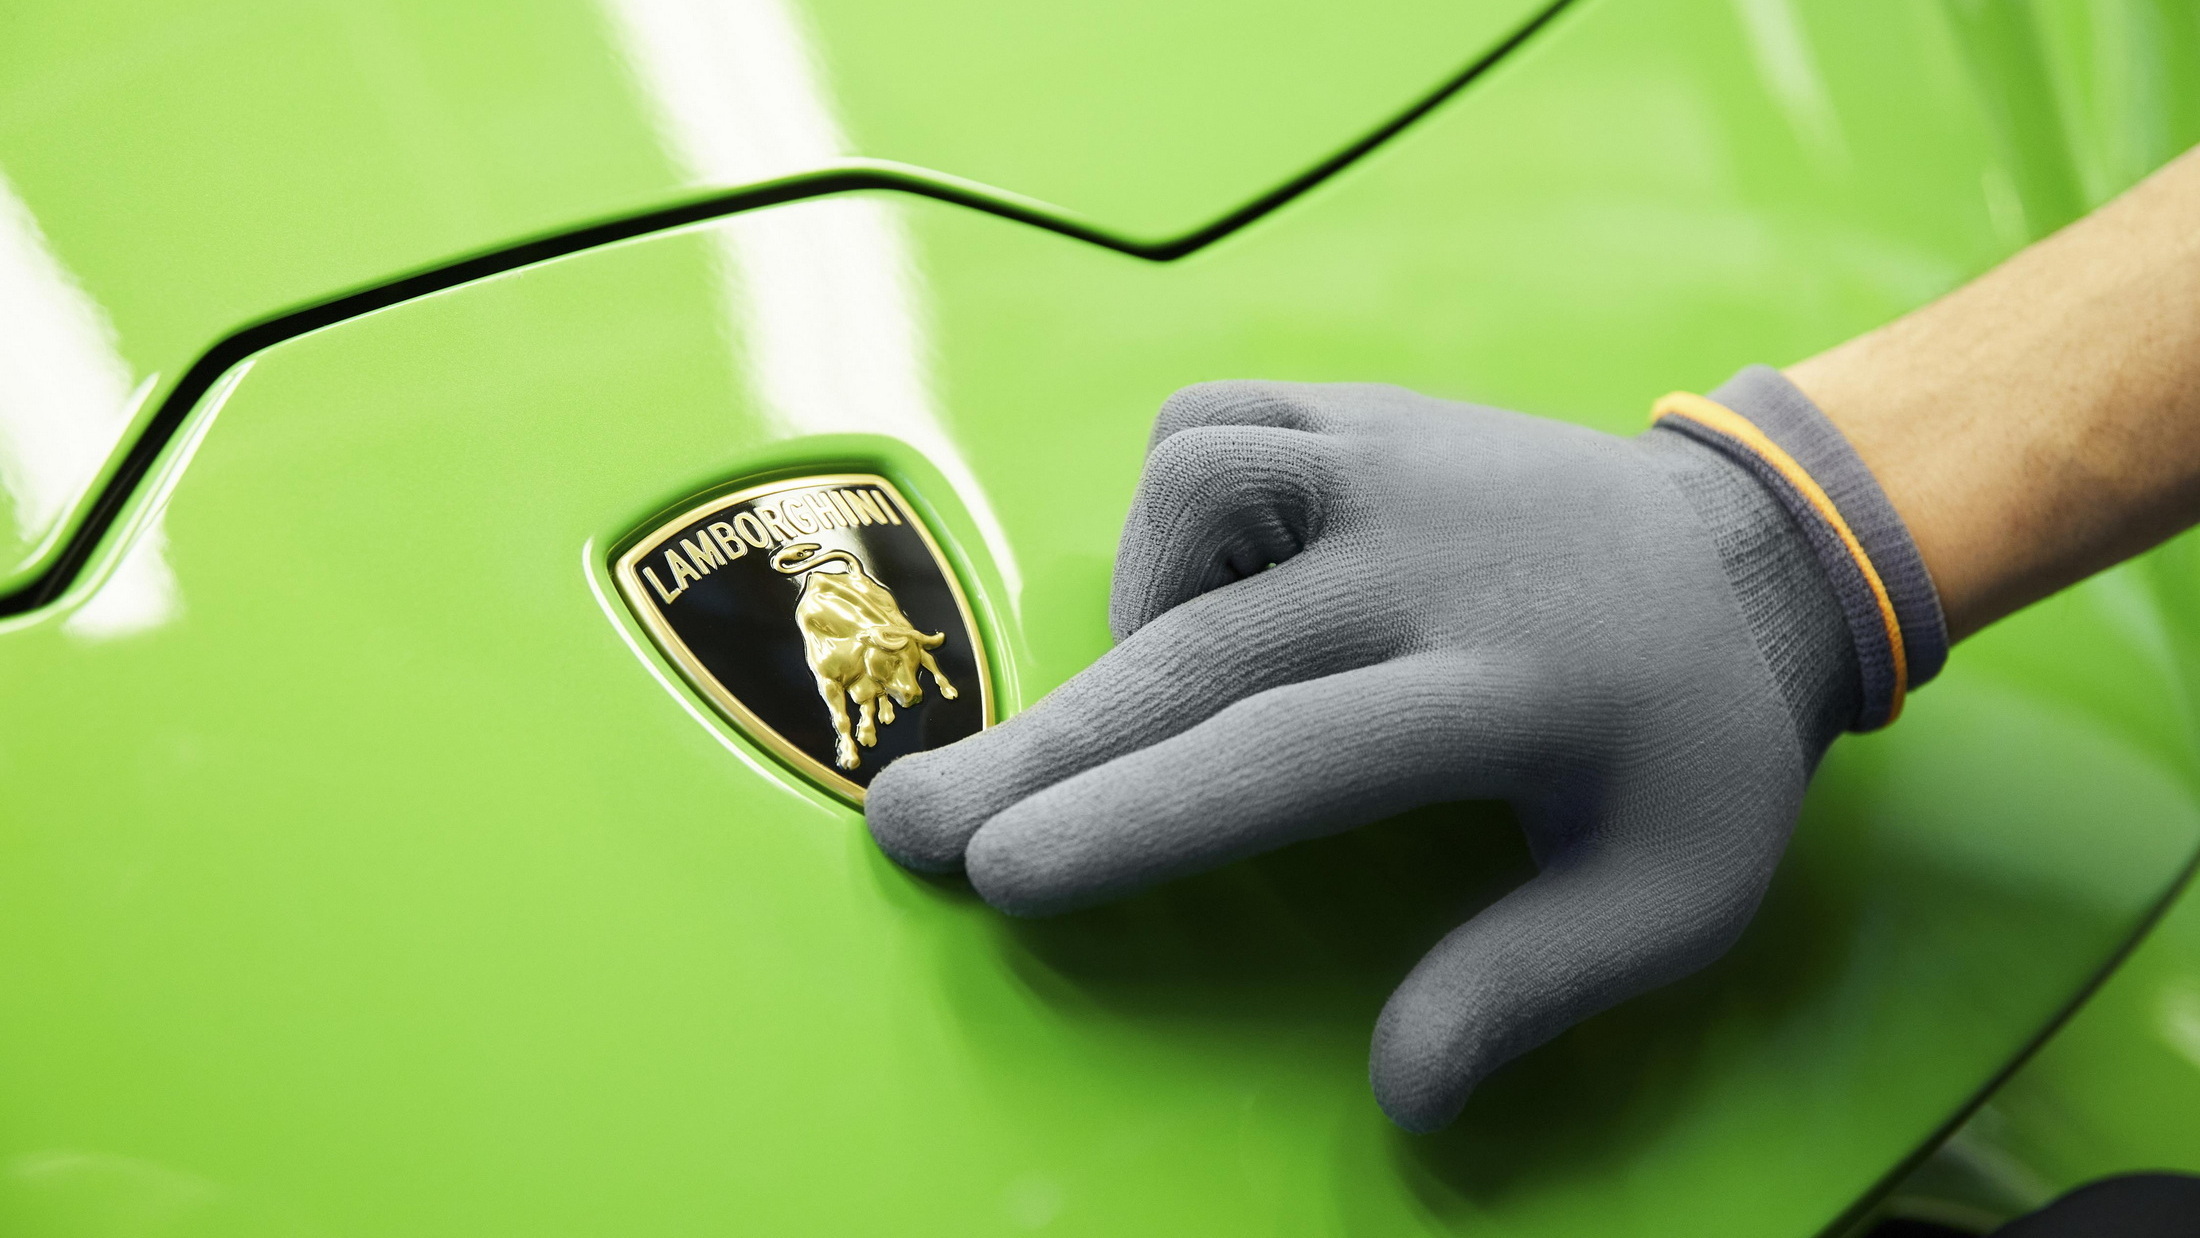 Lamborghini Urus scores new production record